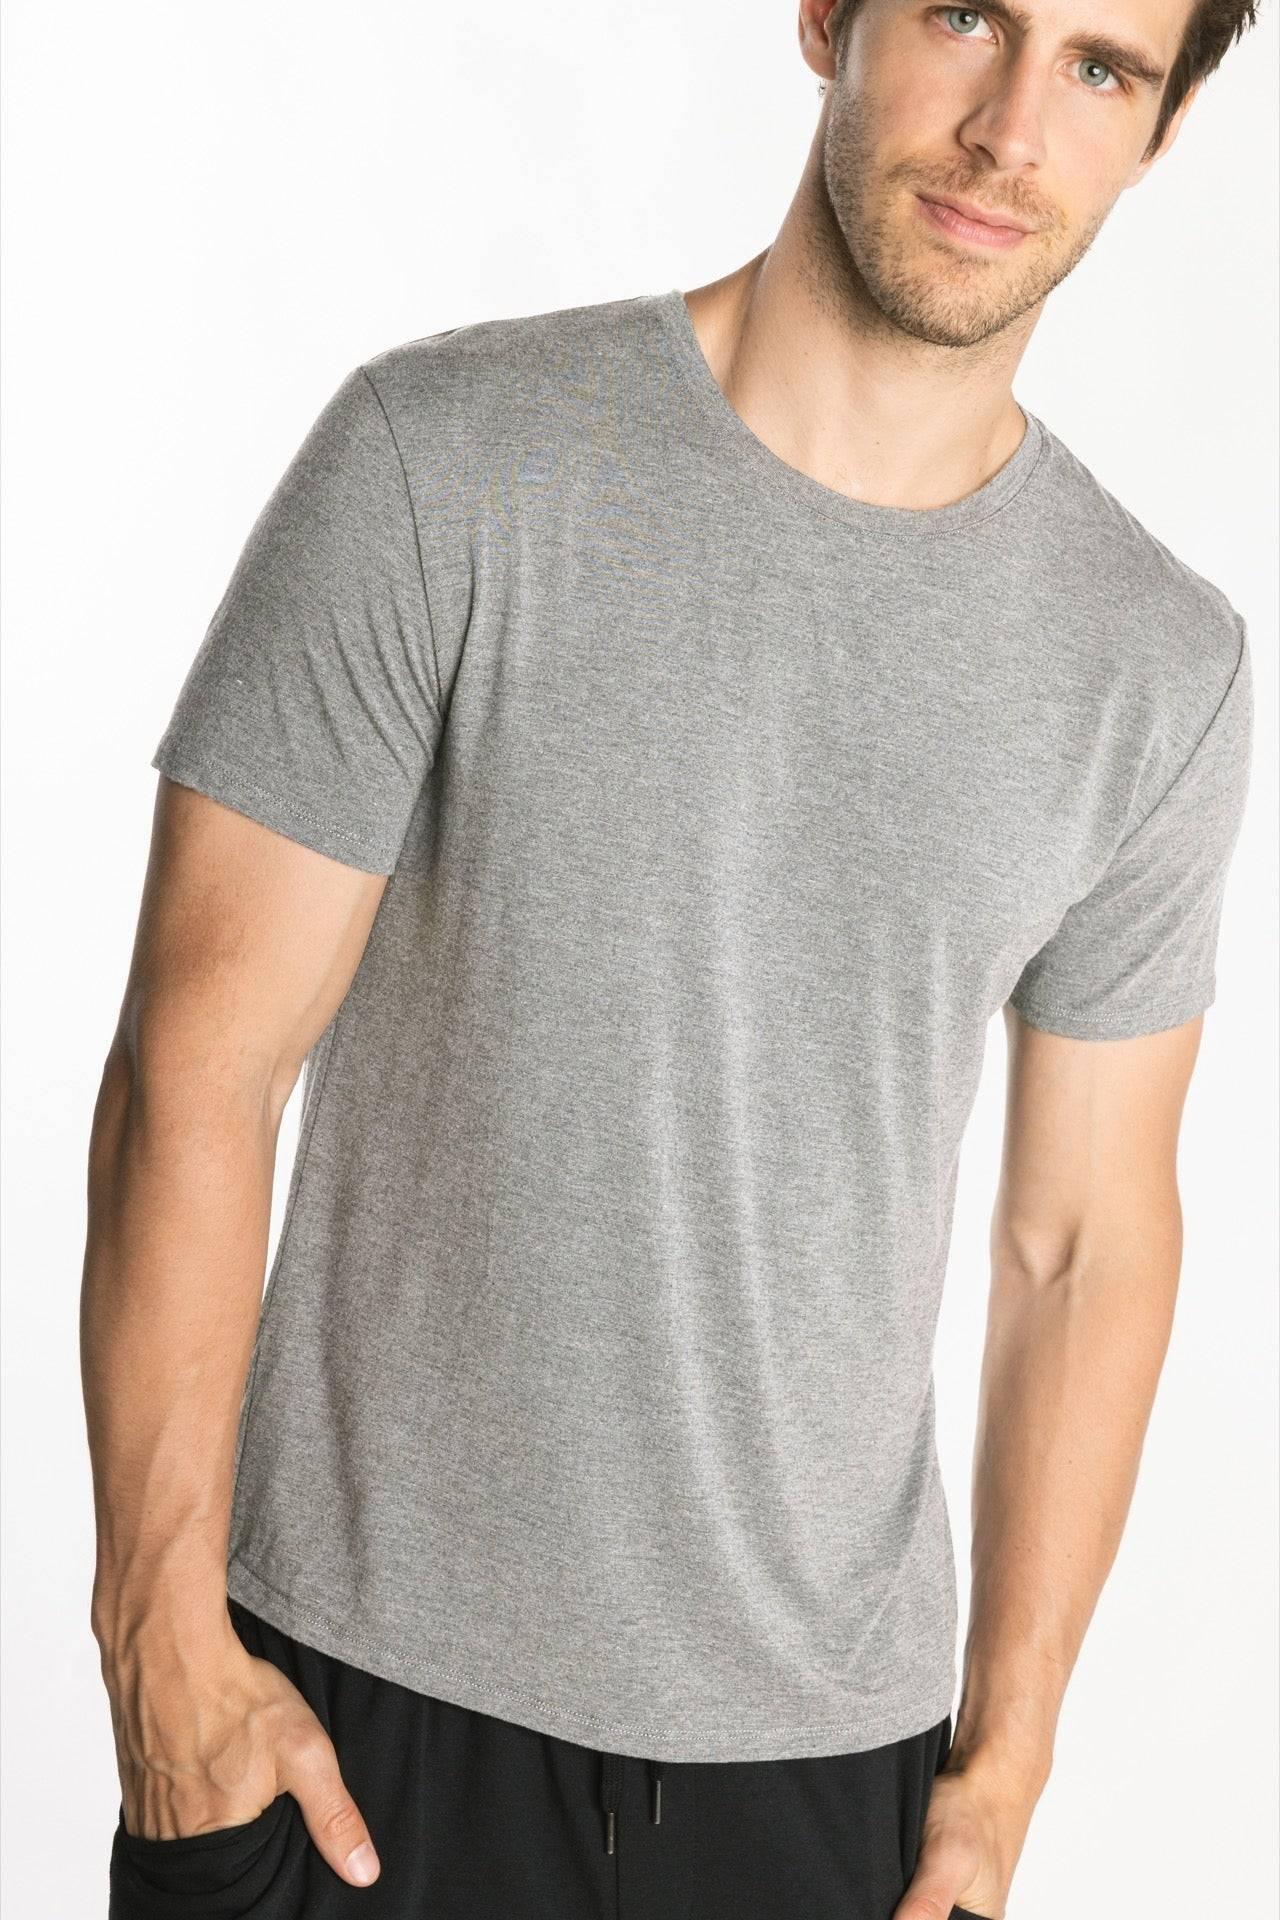 Men High Neck Basic Plain T-Shirt Pullover Short Sleeve Slim Bottoming Top  Shirt